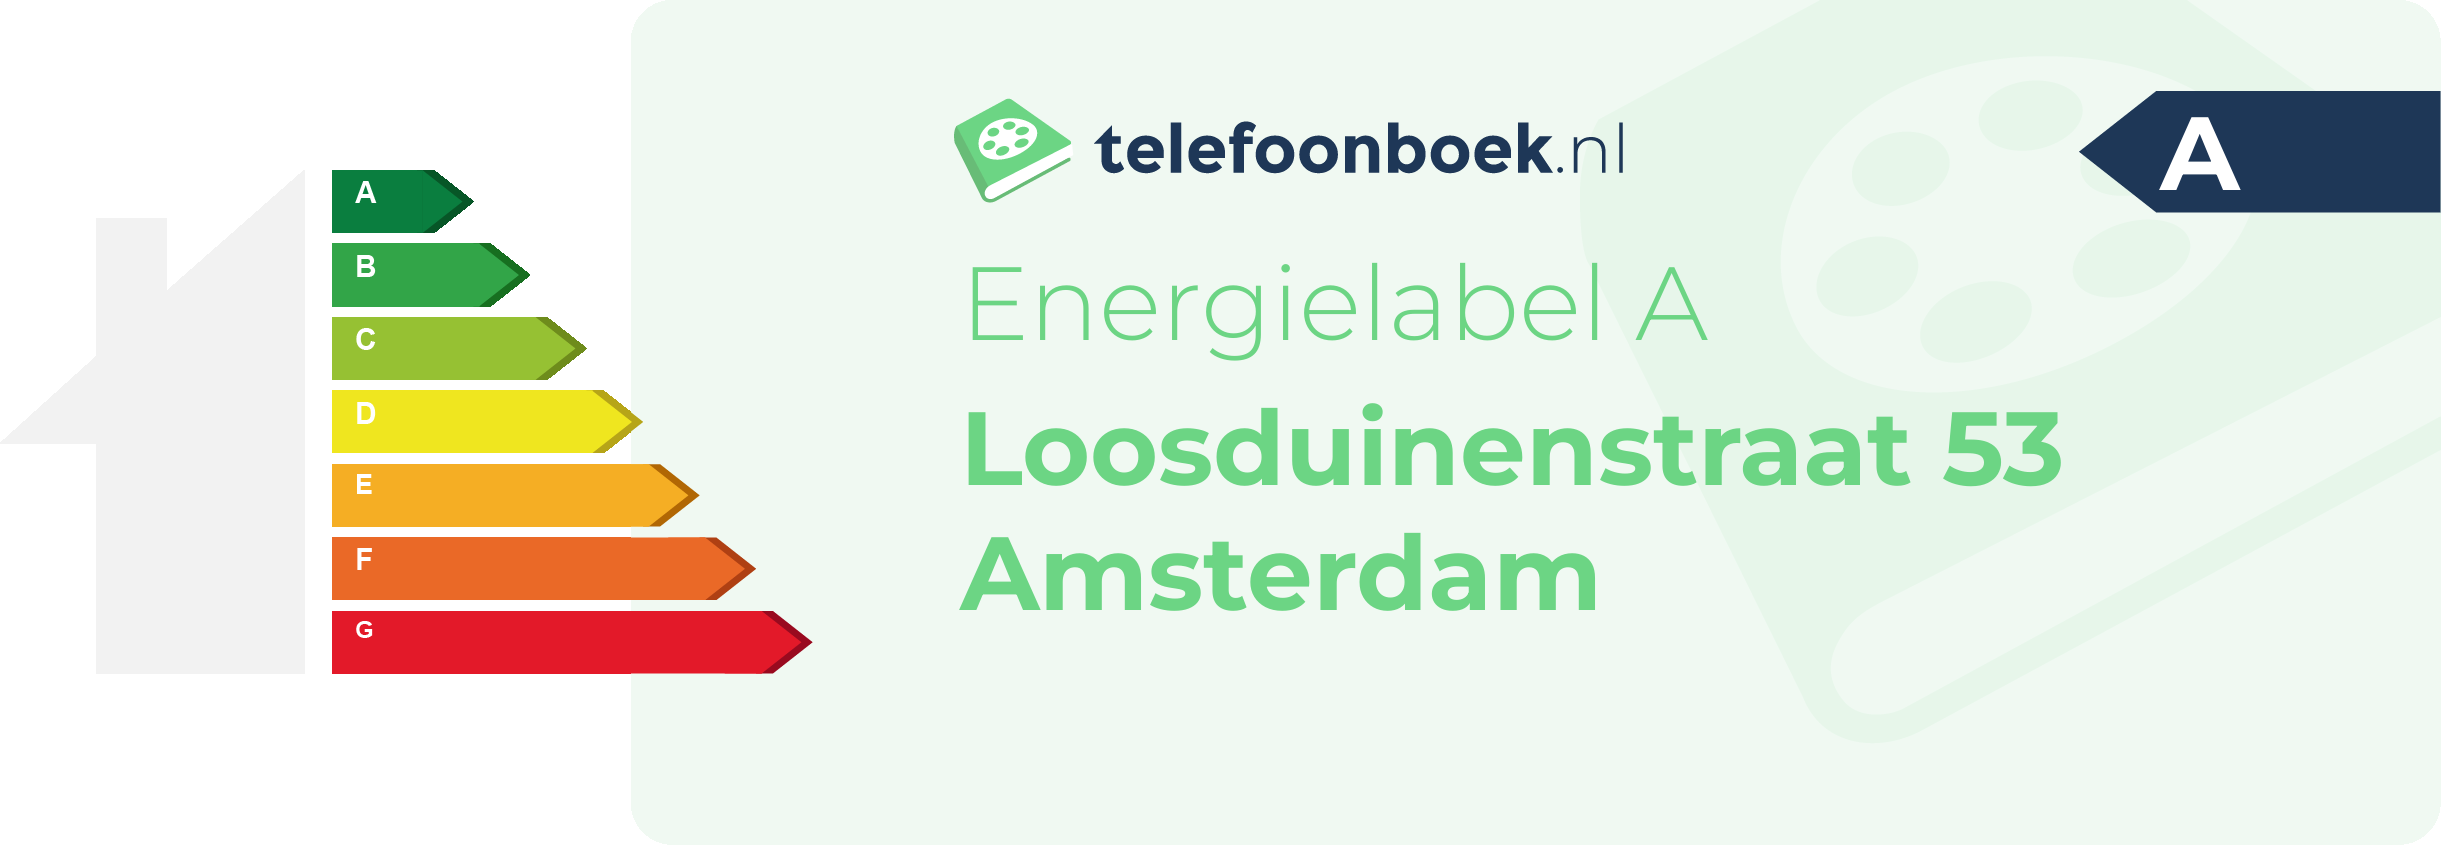 Energielabel Loosduinenstraat 53 Amsterdam